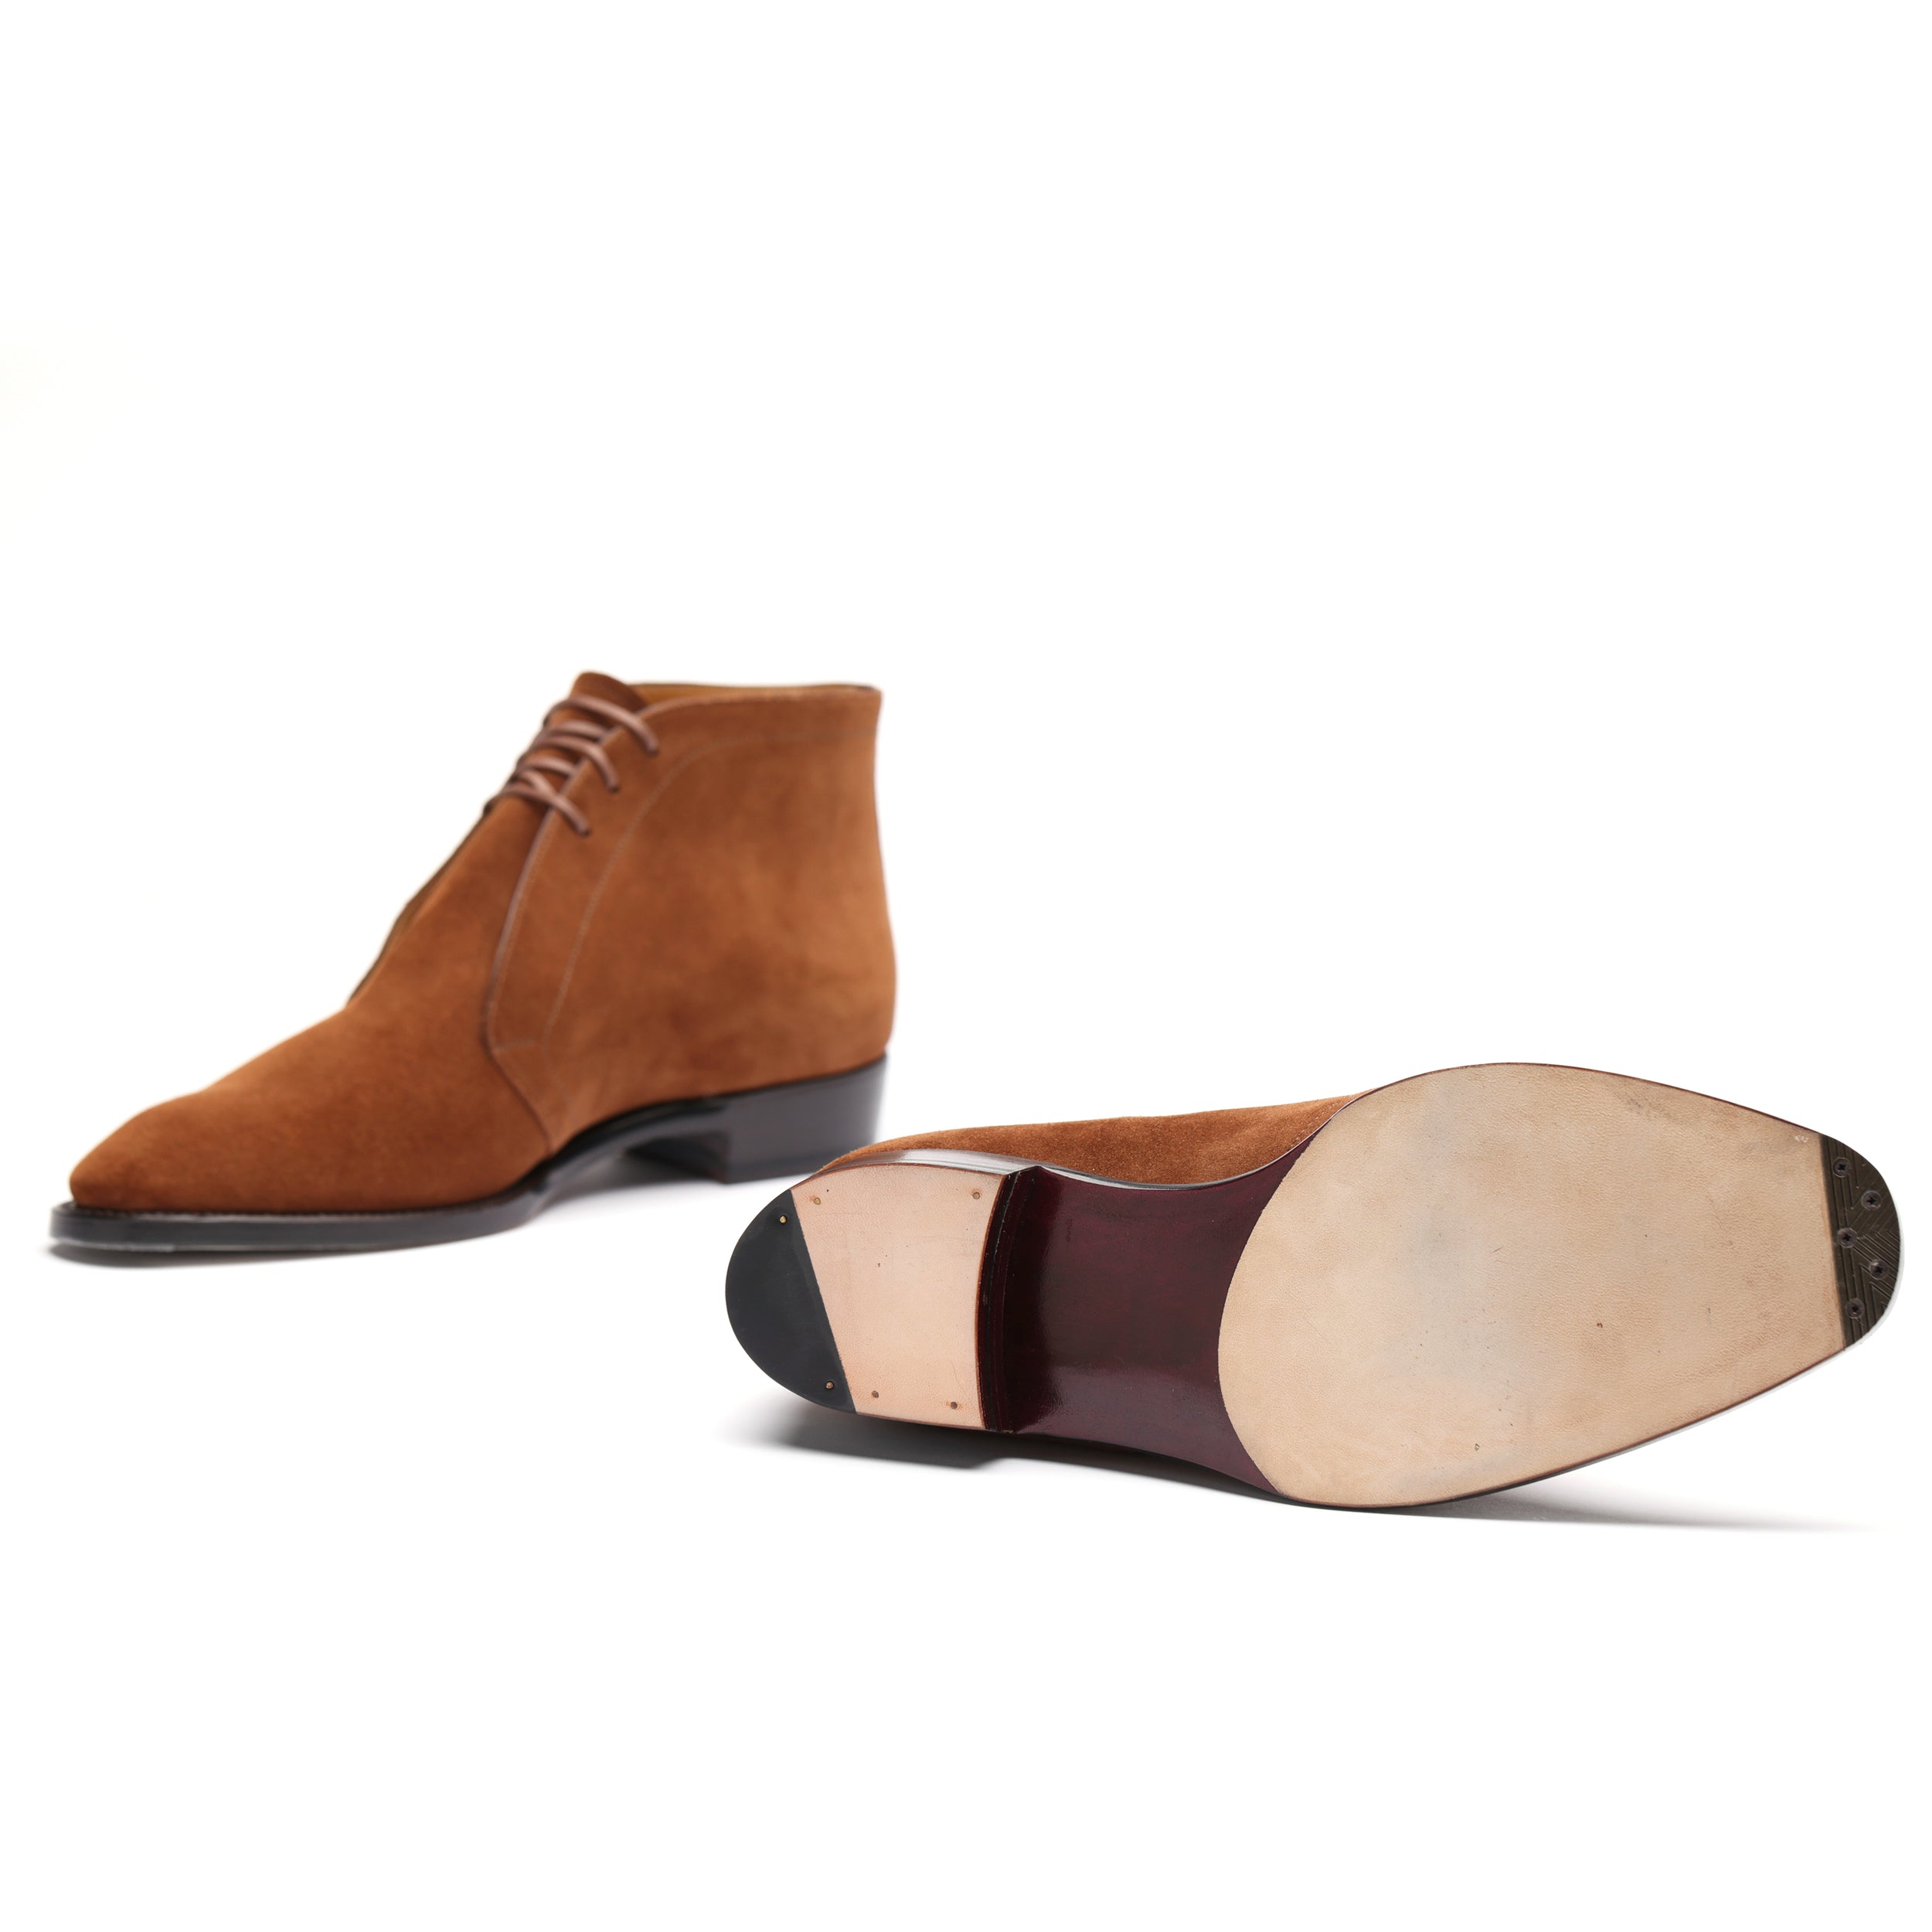 [men's] chukka boots - brown